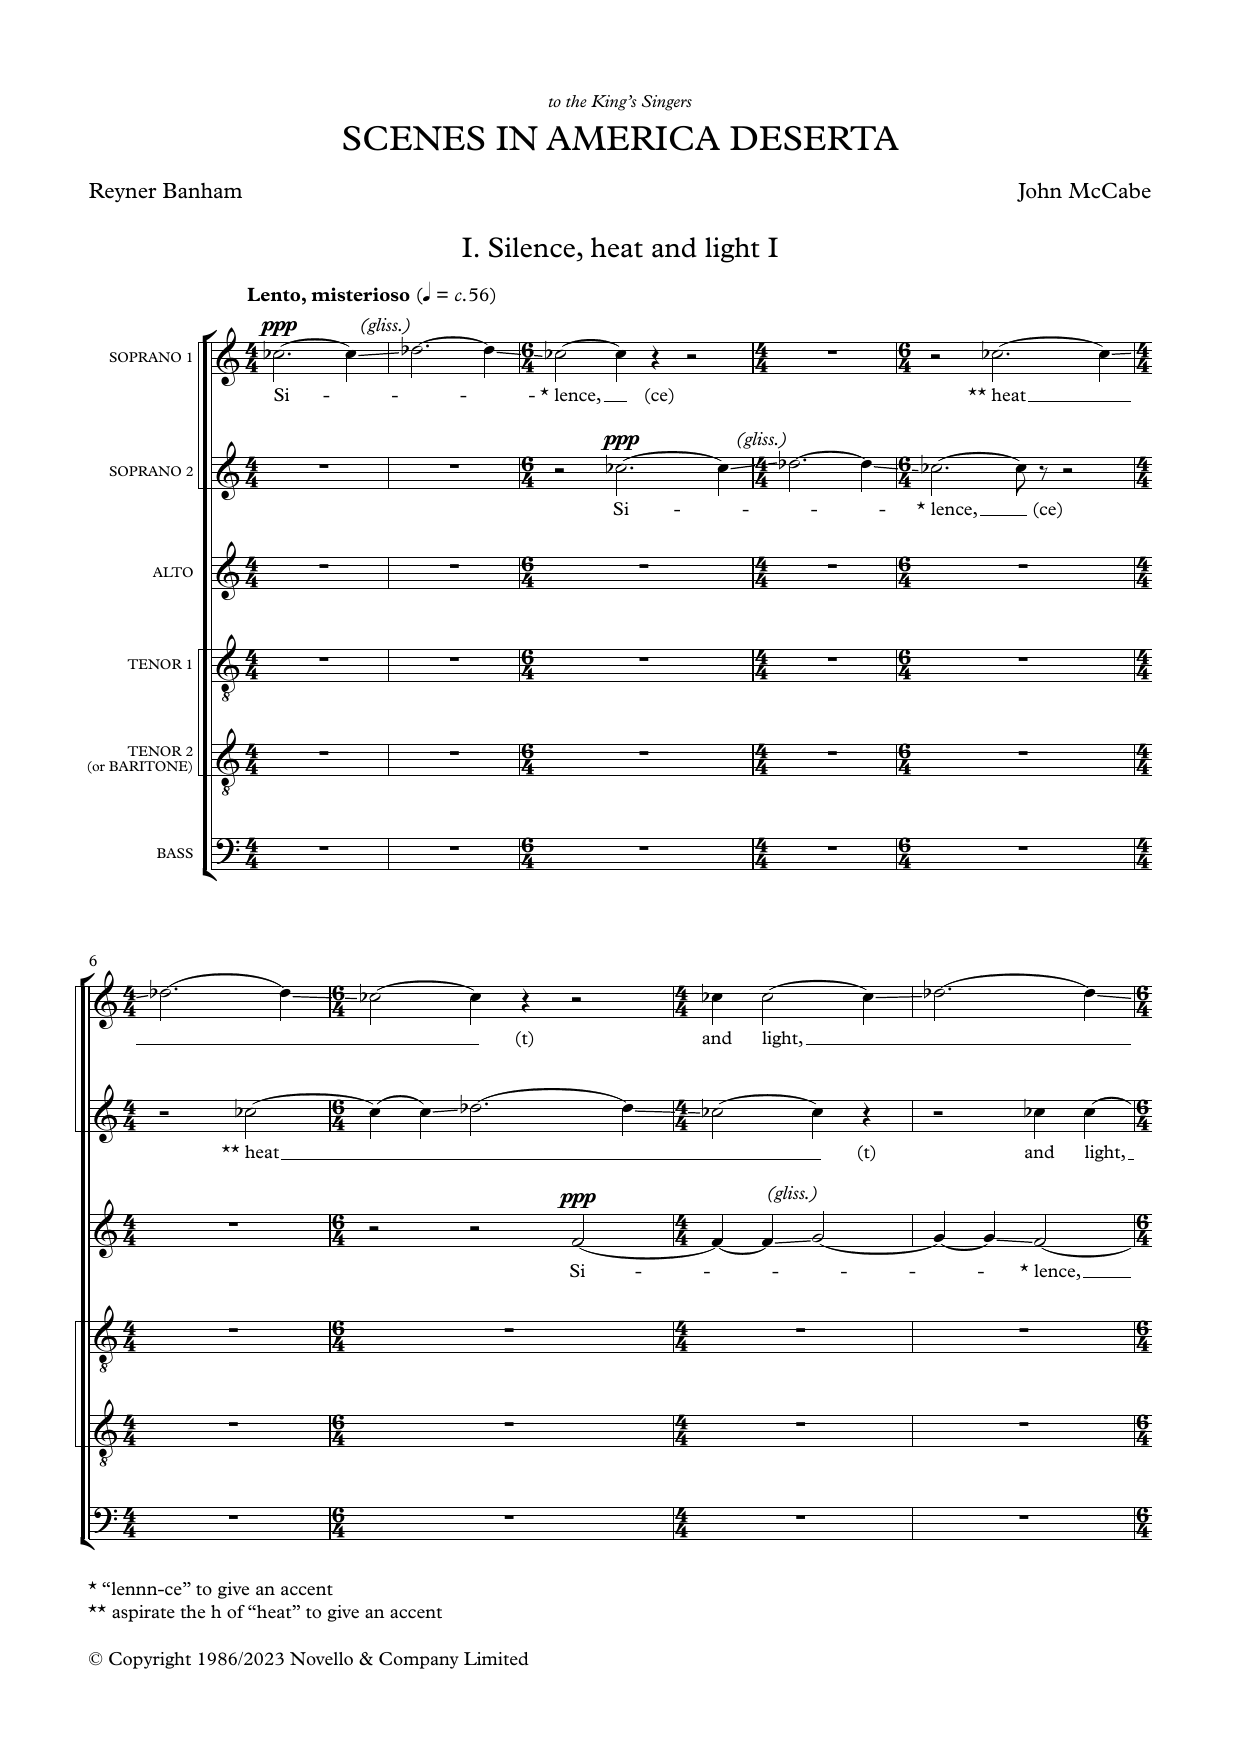 John McCabe Scenes in America Deserta (SSATTB version) Sheet Music Notes & Chords for Choir - Download or Print PDF